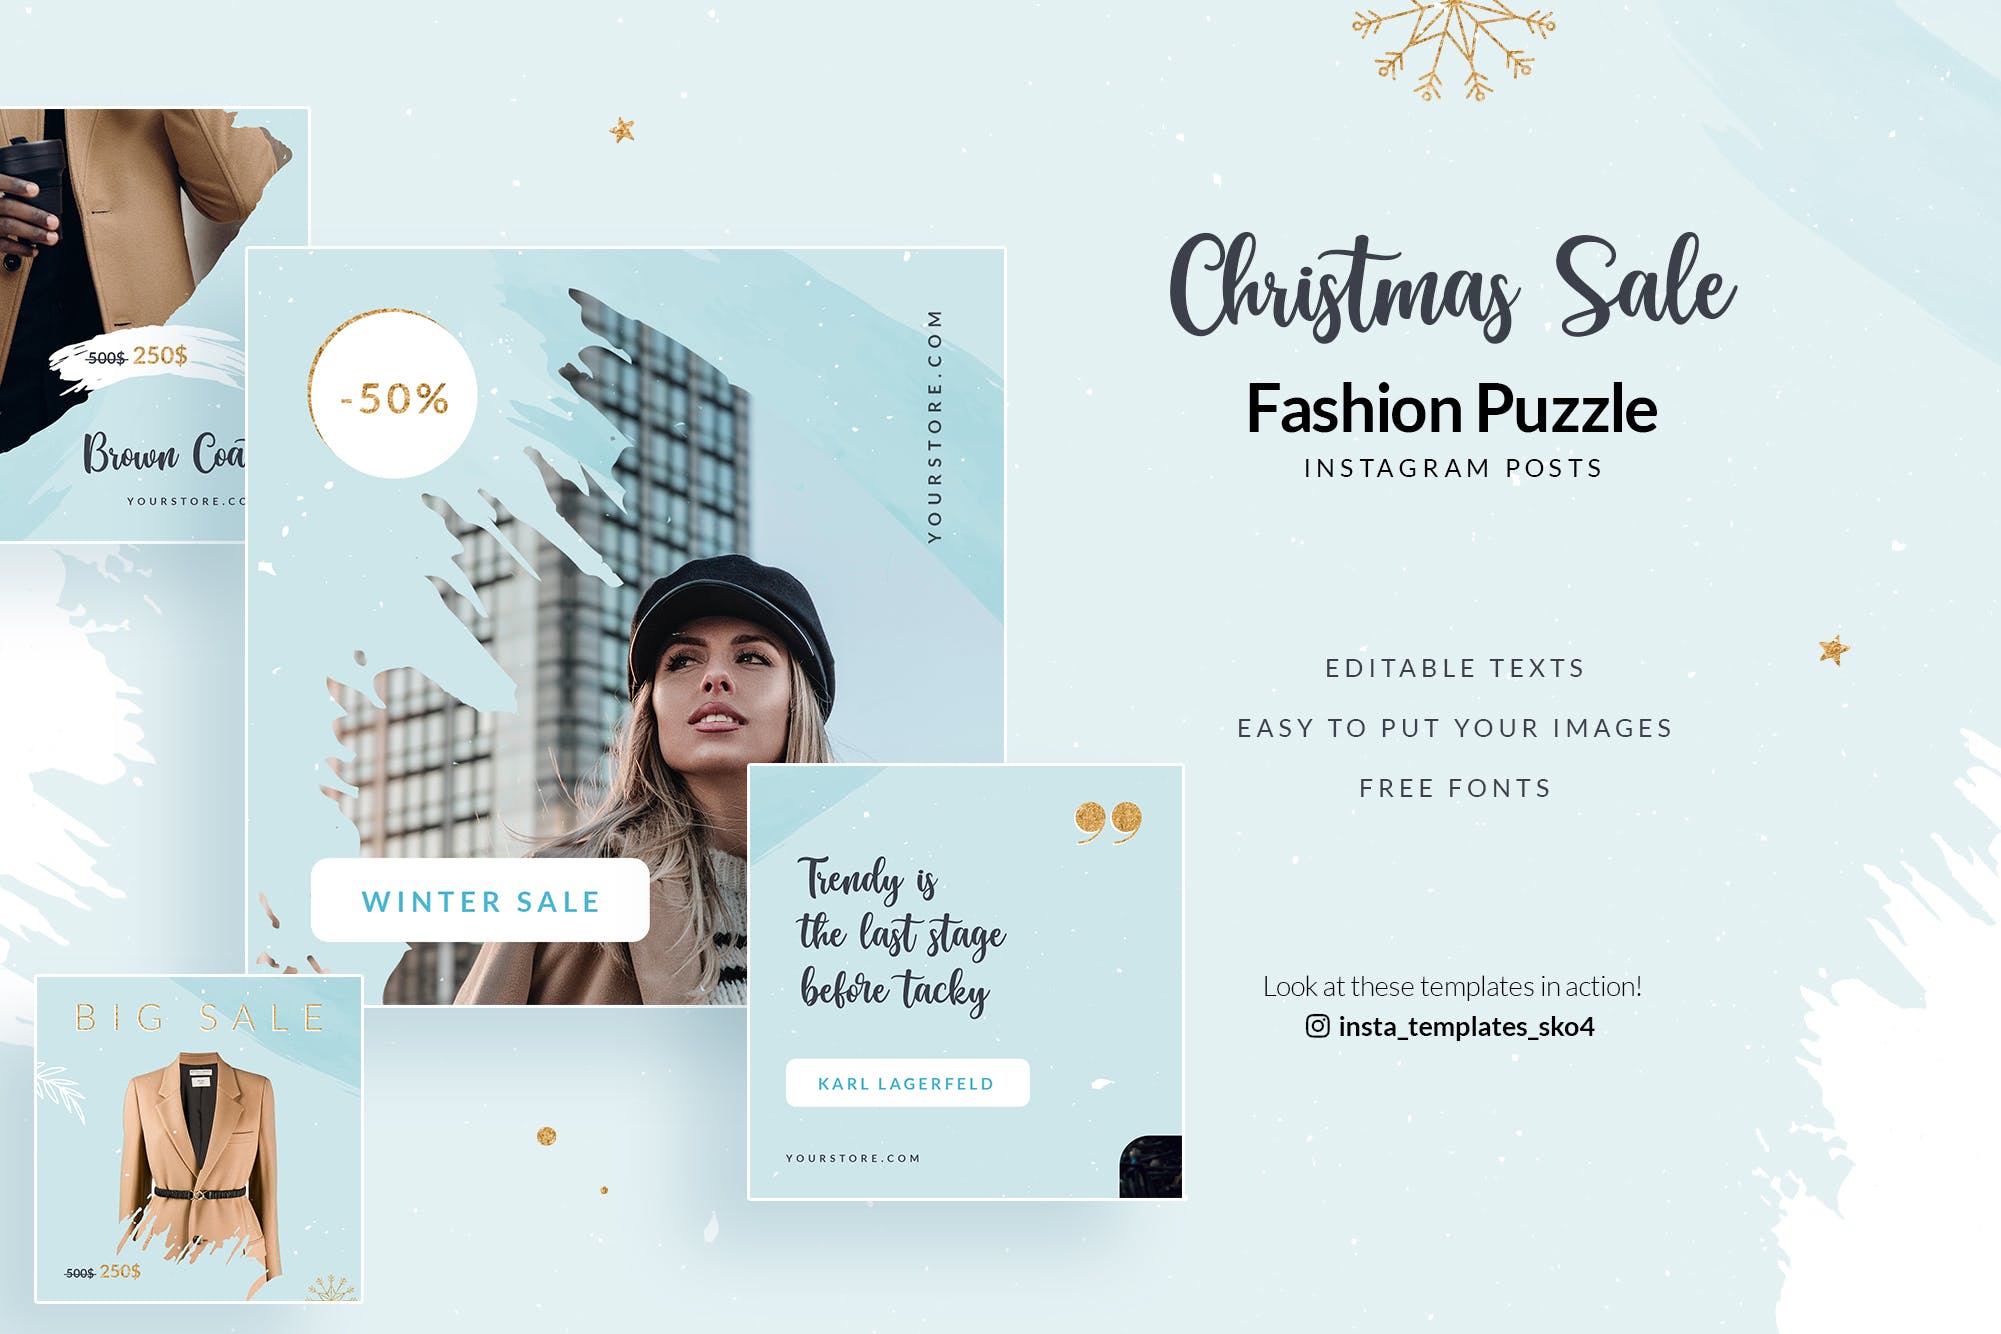 圣诞节时尚促销广告Instagram拼图风格设计模板16图库精选 Christmas Fashion Sale – Instagram Puzzle插图(2)